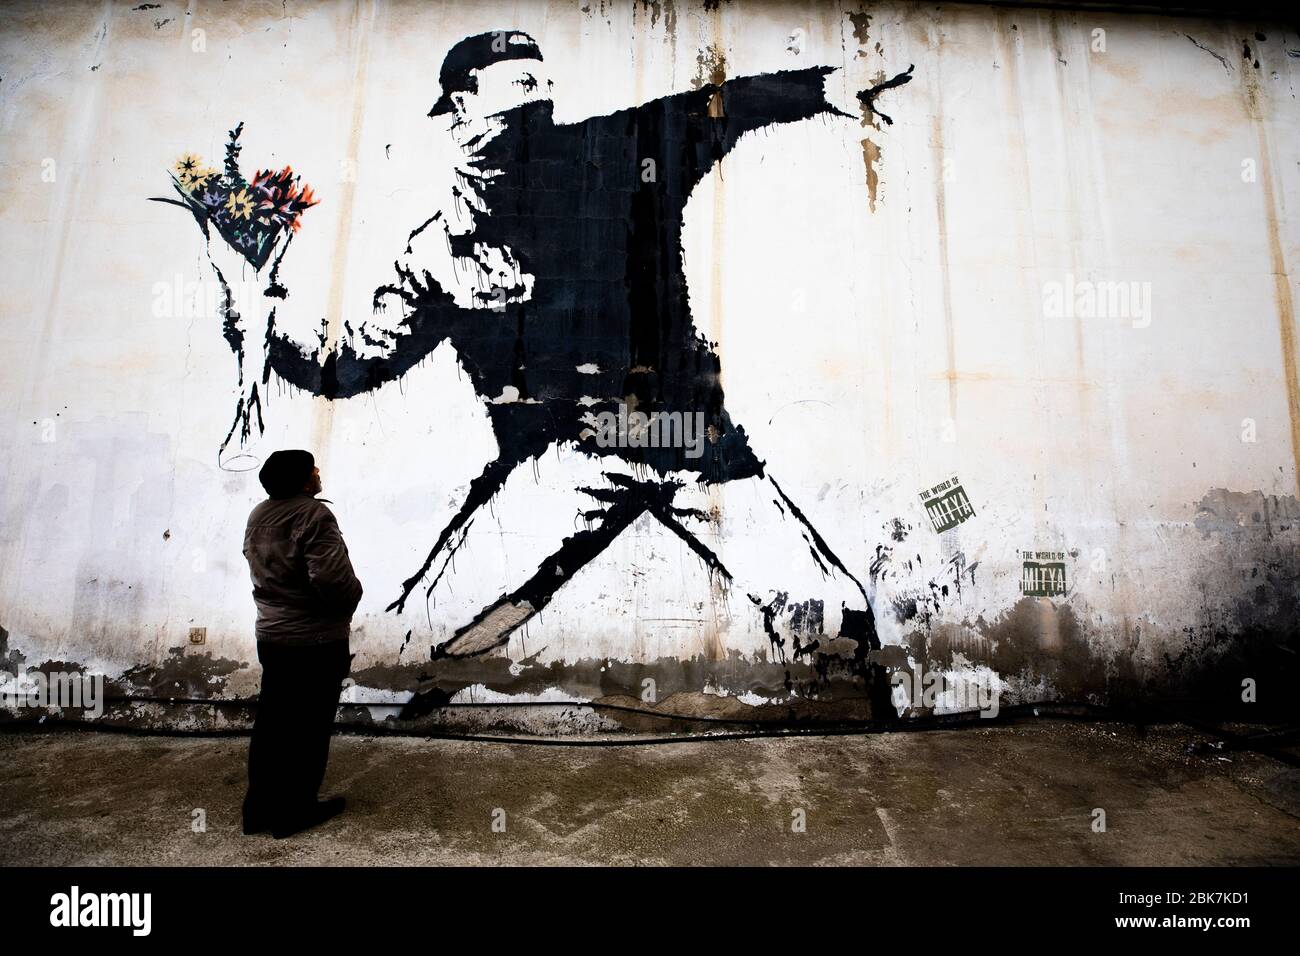 Bansky's celebrated graffiti in Bethlehem, Palestine Stock Photo